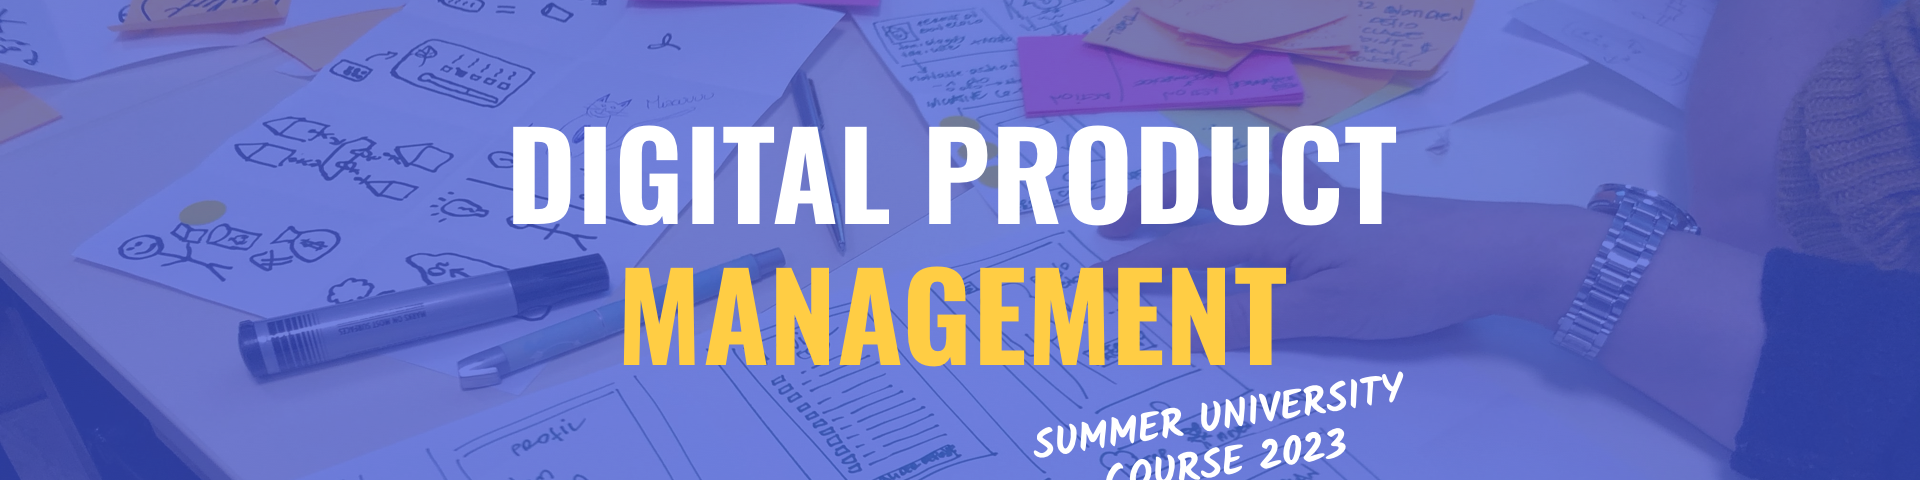 UniTartu Summer School Digital Product Management